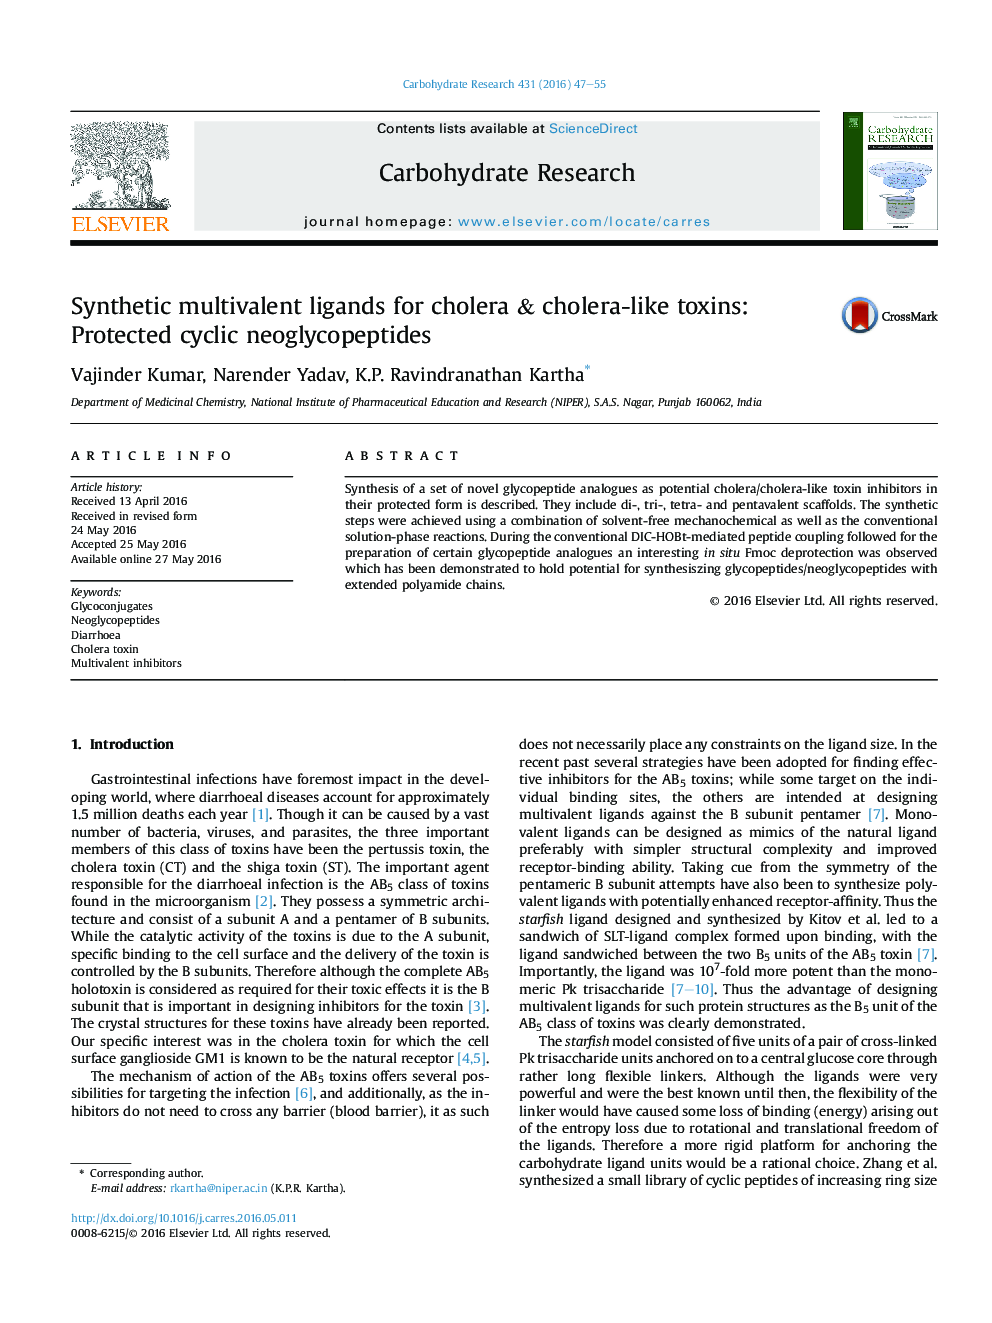 Synthetic multivalent ligands for cholera & cholera-like toxins: Protected cyclic neoglycopeptides